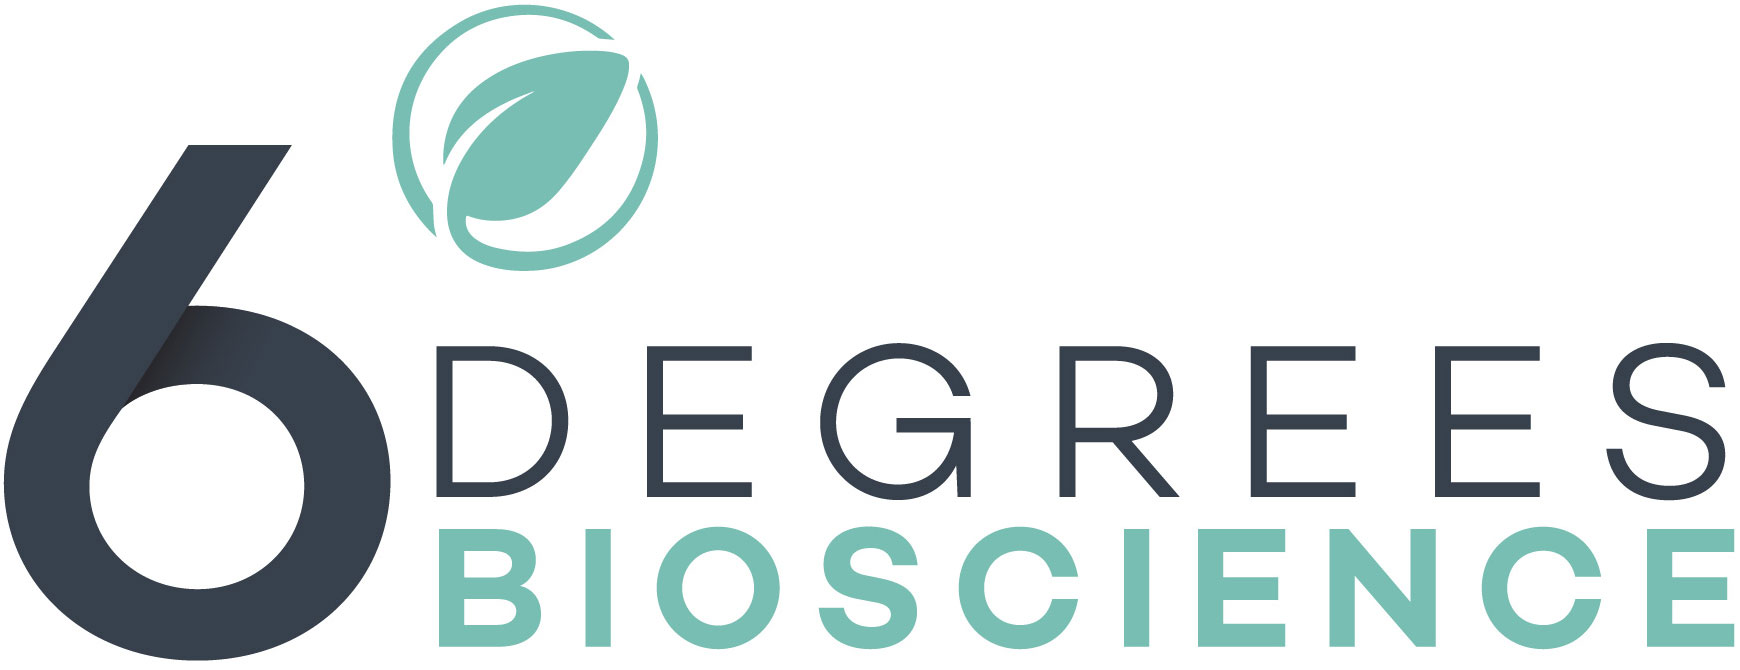 6 Degrees Bio Science Logo